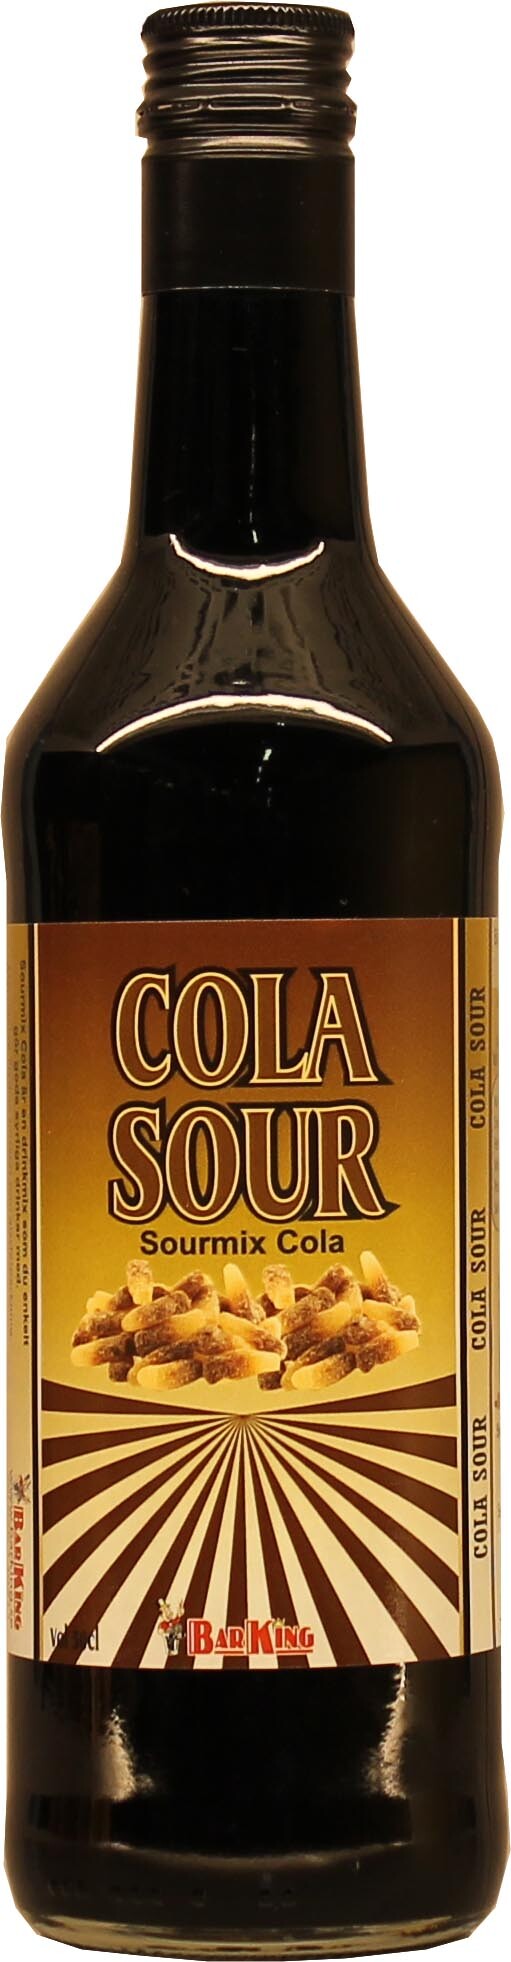 Cola Sour drink.